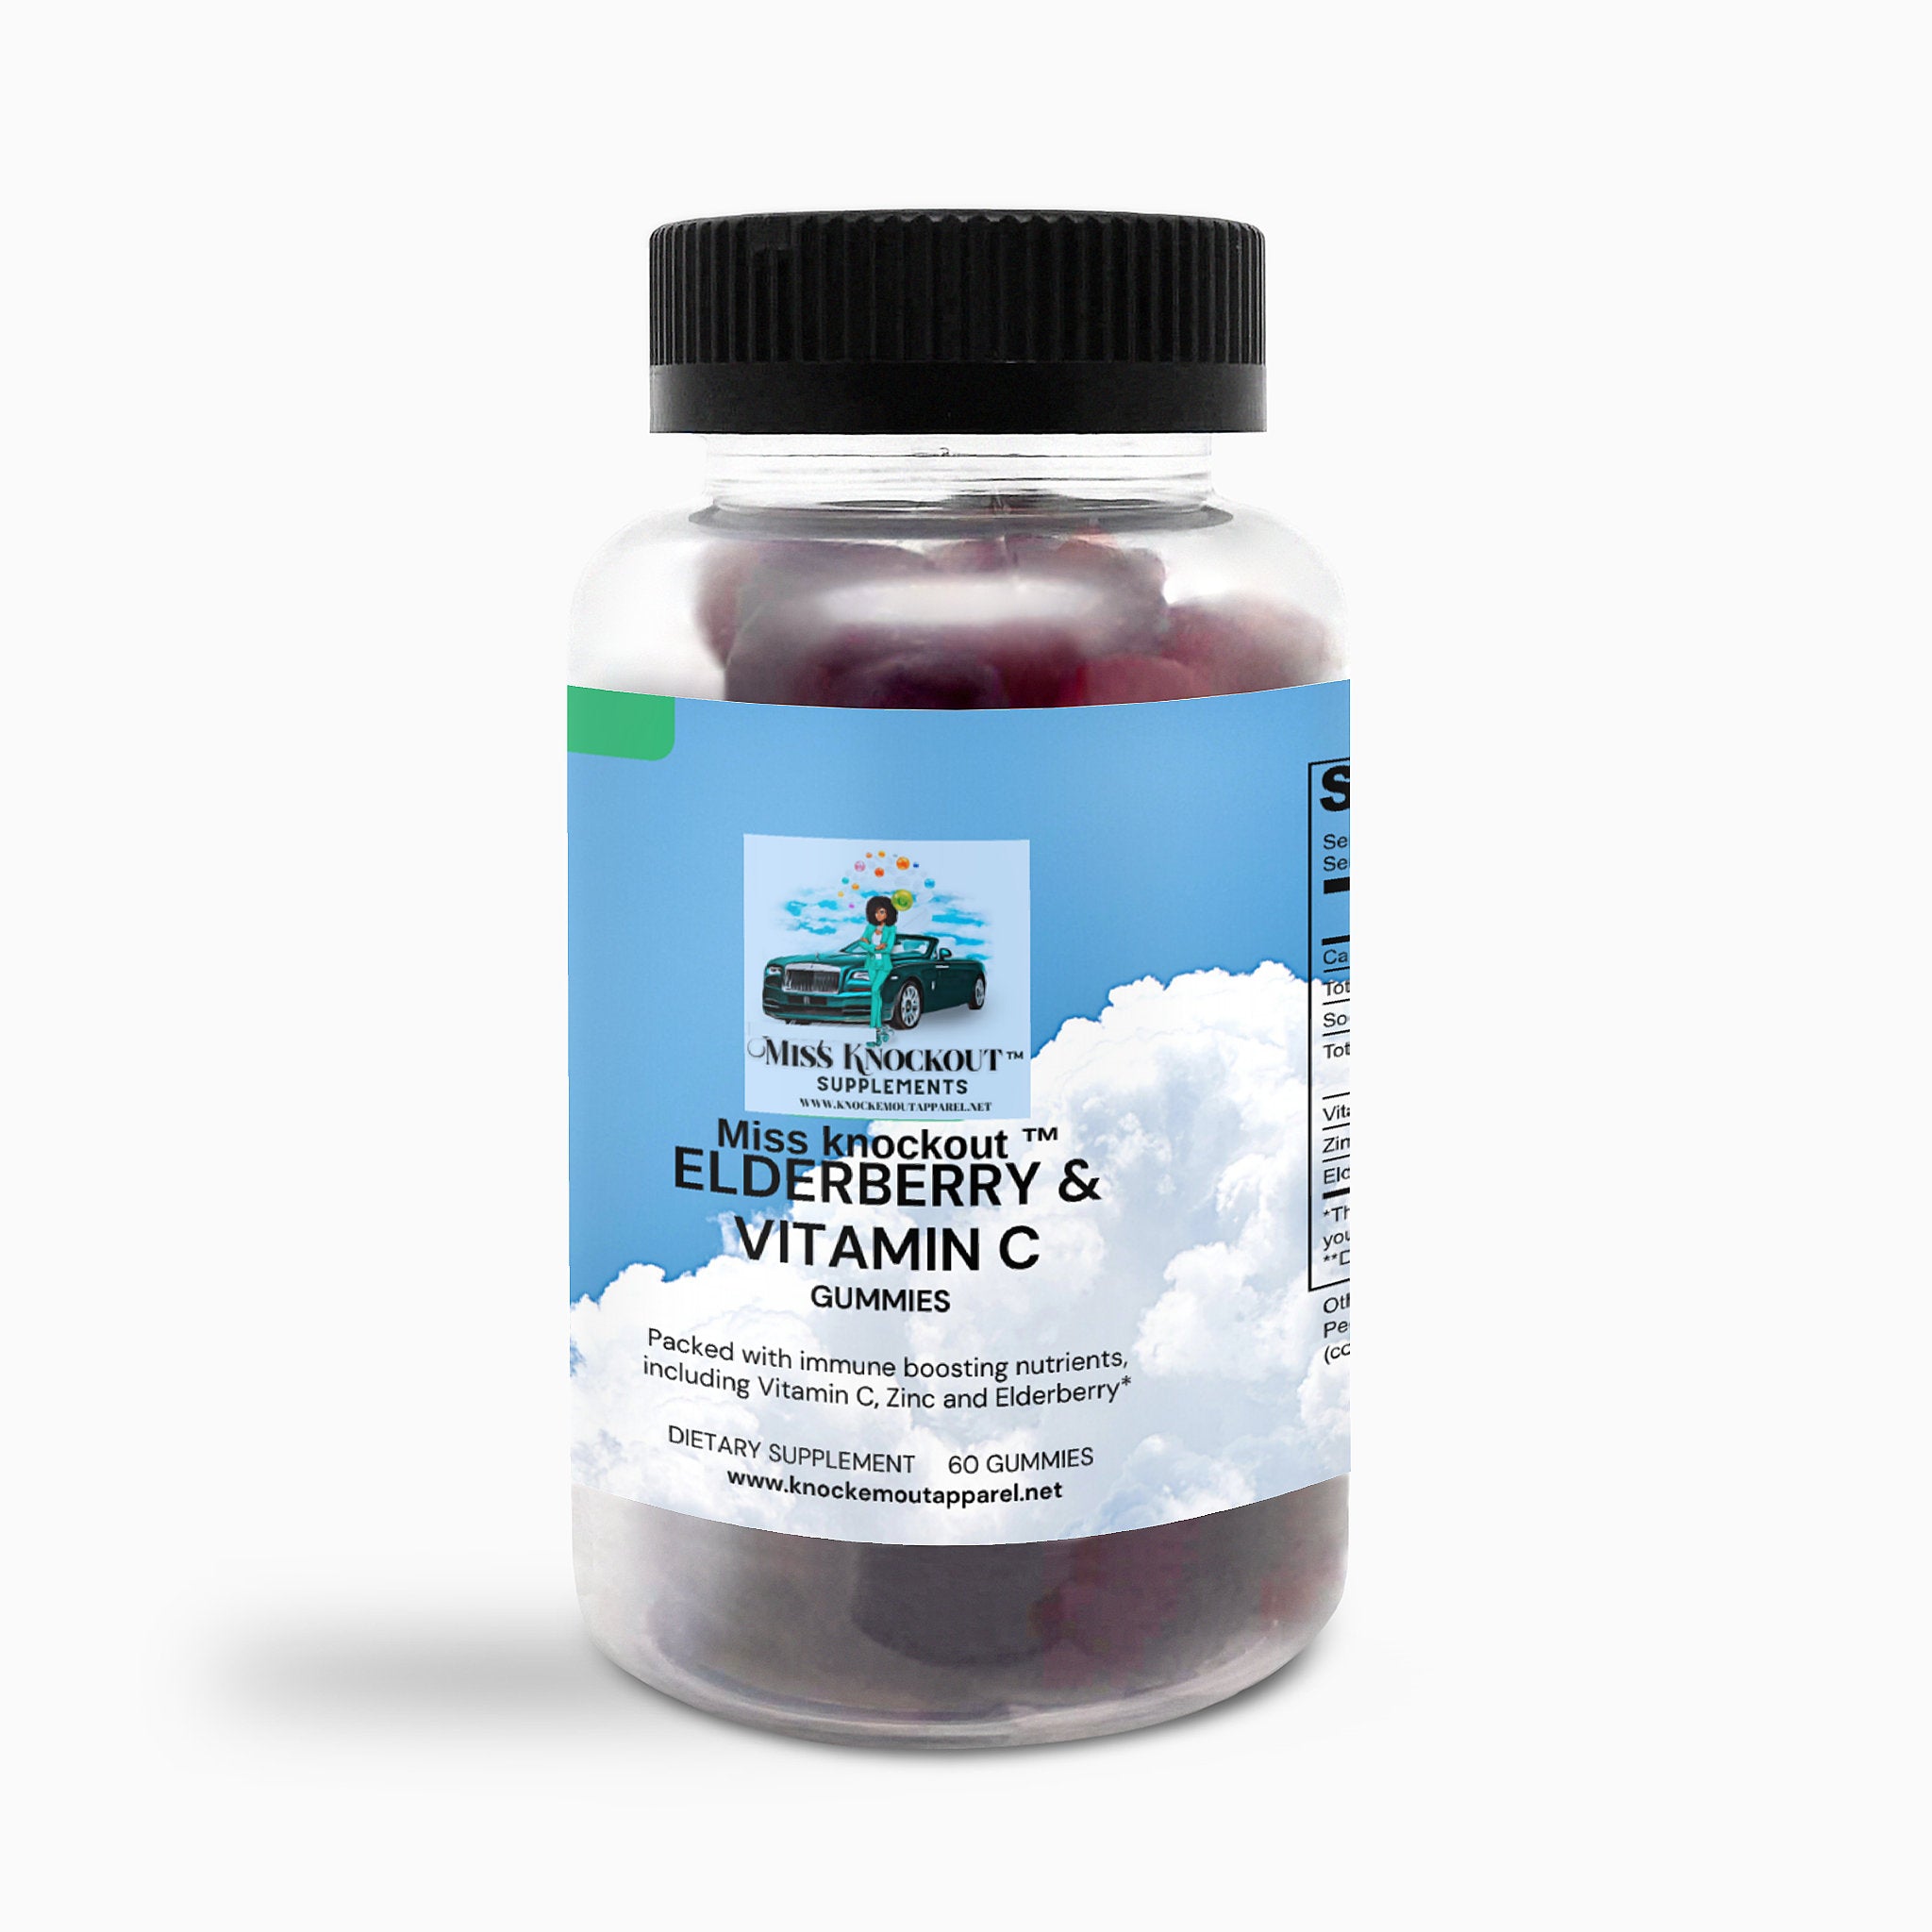 Elderberry & Vitamin C Gummies Miss knockout ™ Supplements